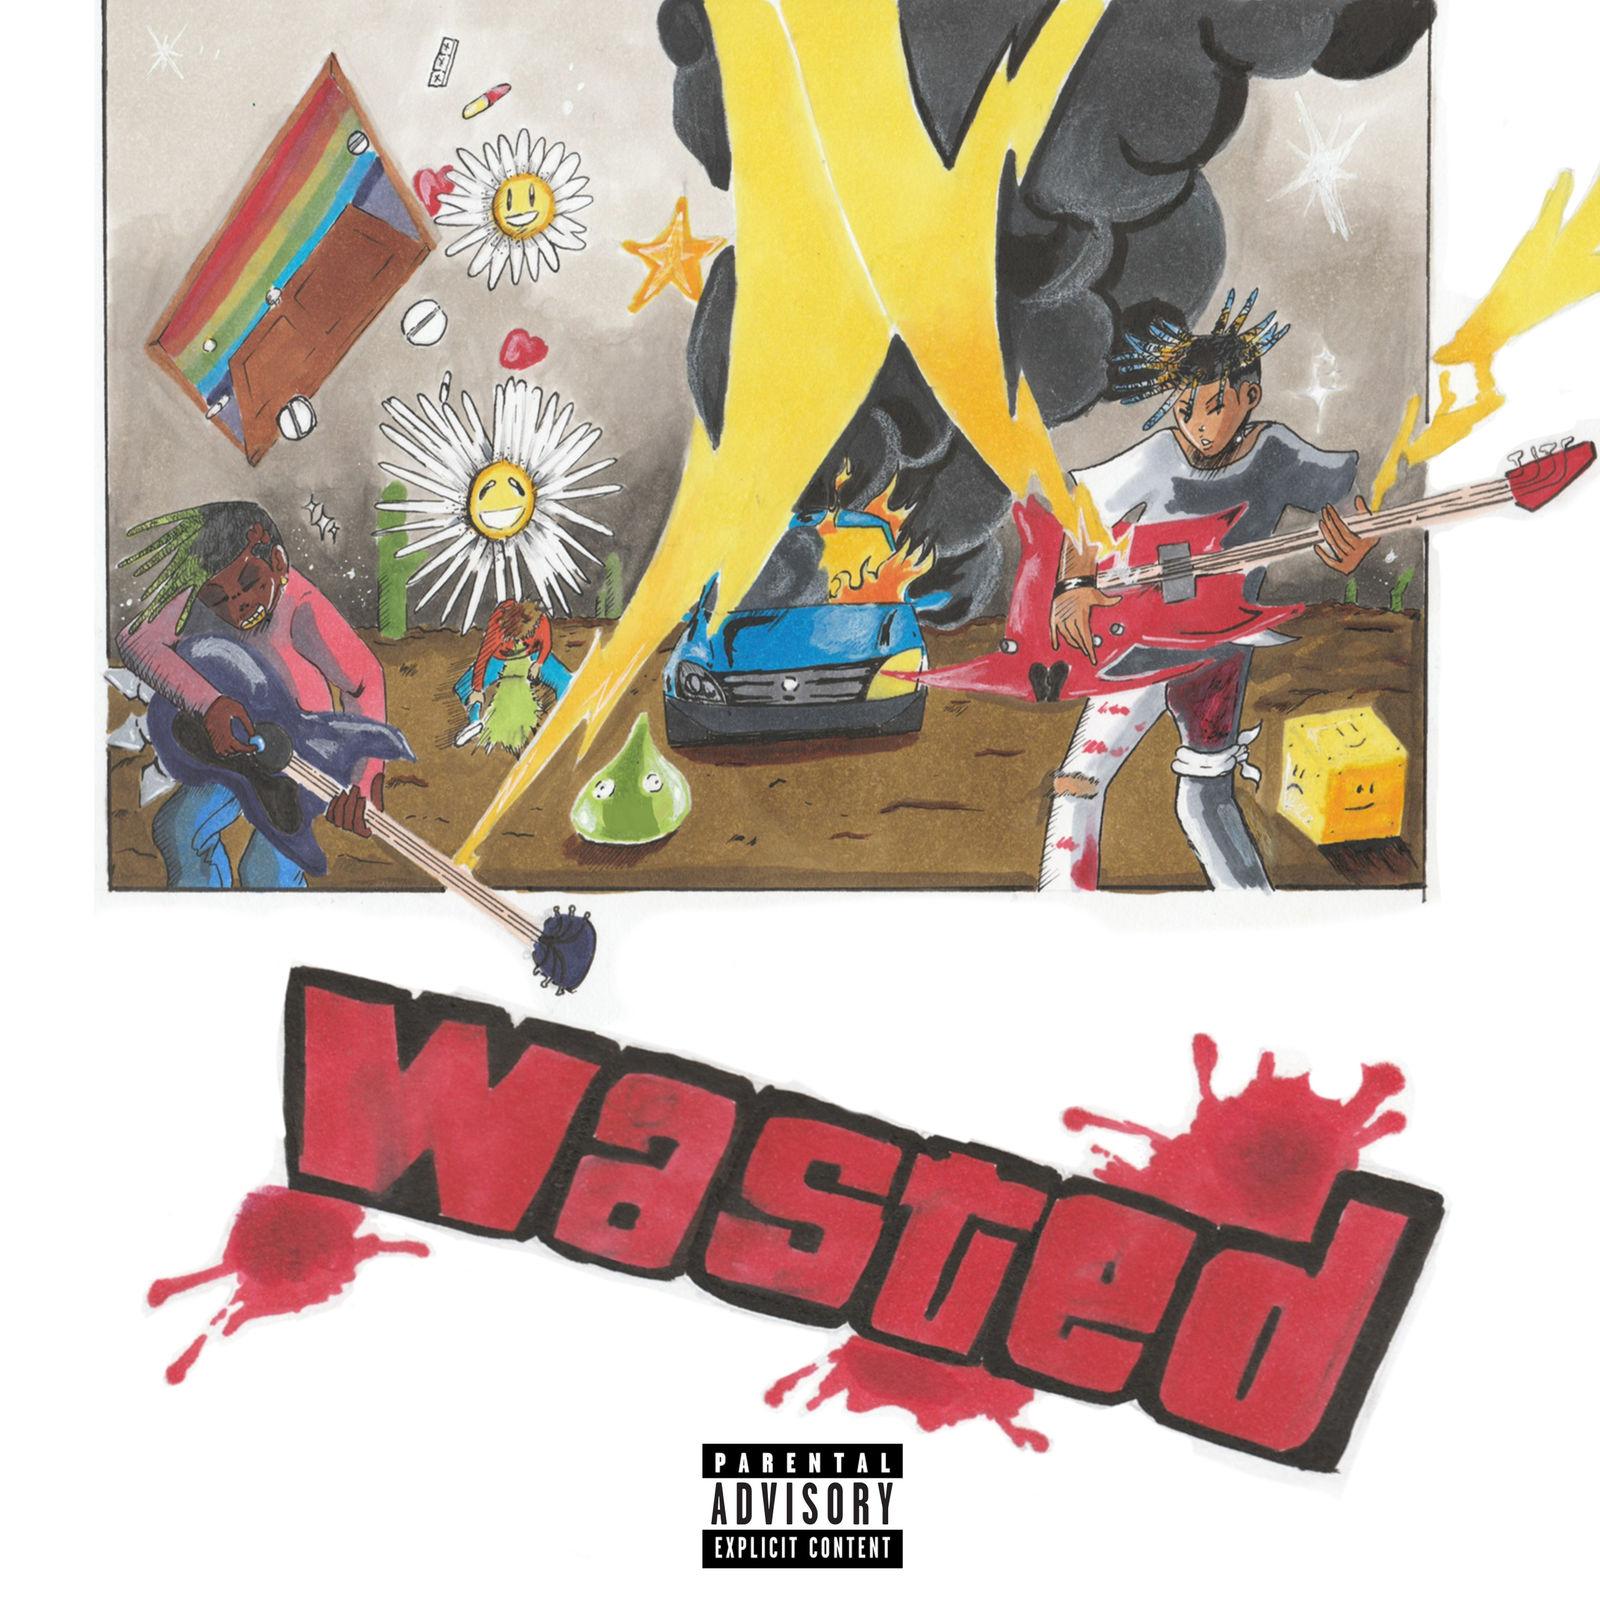 Juice WRLD “WASTED” (Feat. Lil Uzi Vert)